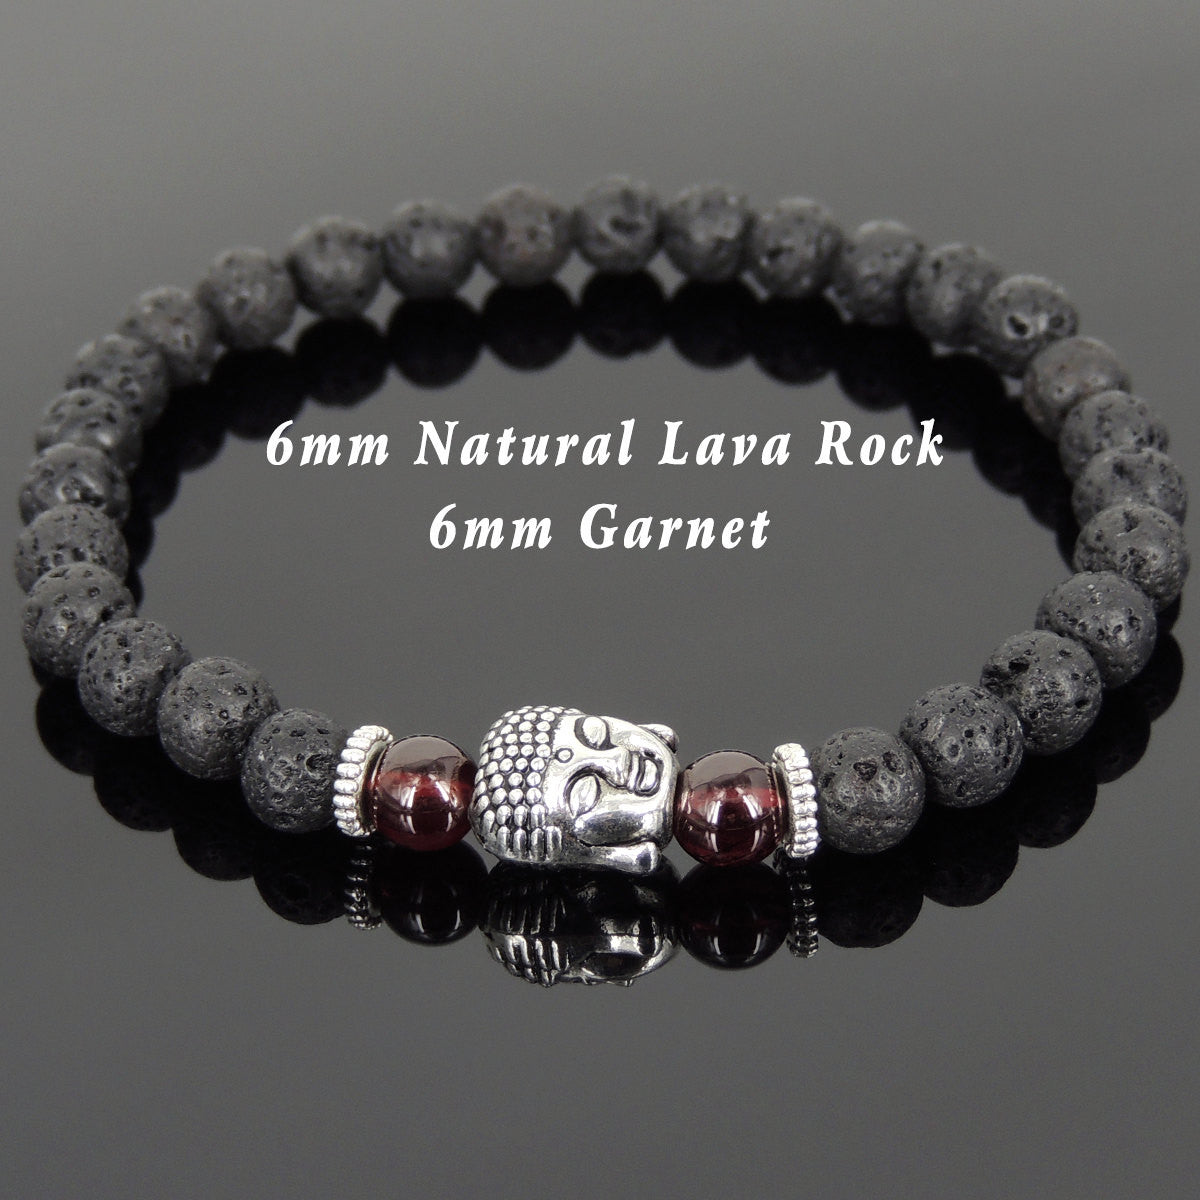 6mm Garnet & Lava Rock Healing Gemstone Bracelet with Tibetan Silver Sakyamuni Buddha & Spacers - Handmade by Gem & Silver TSB130